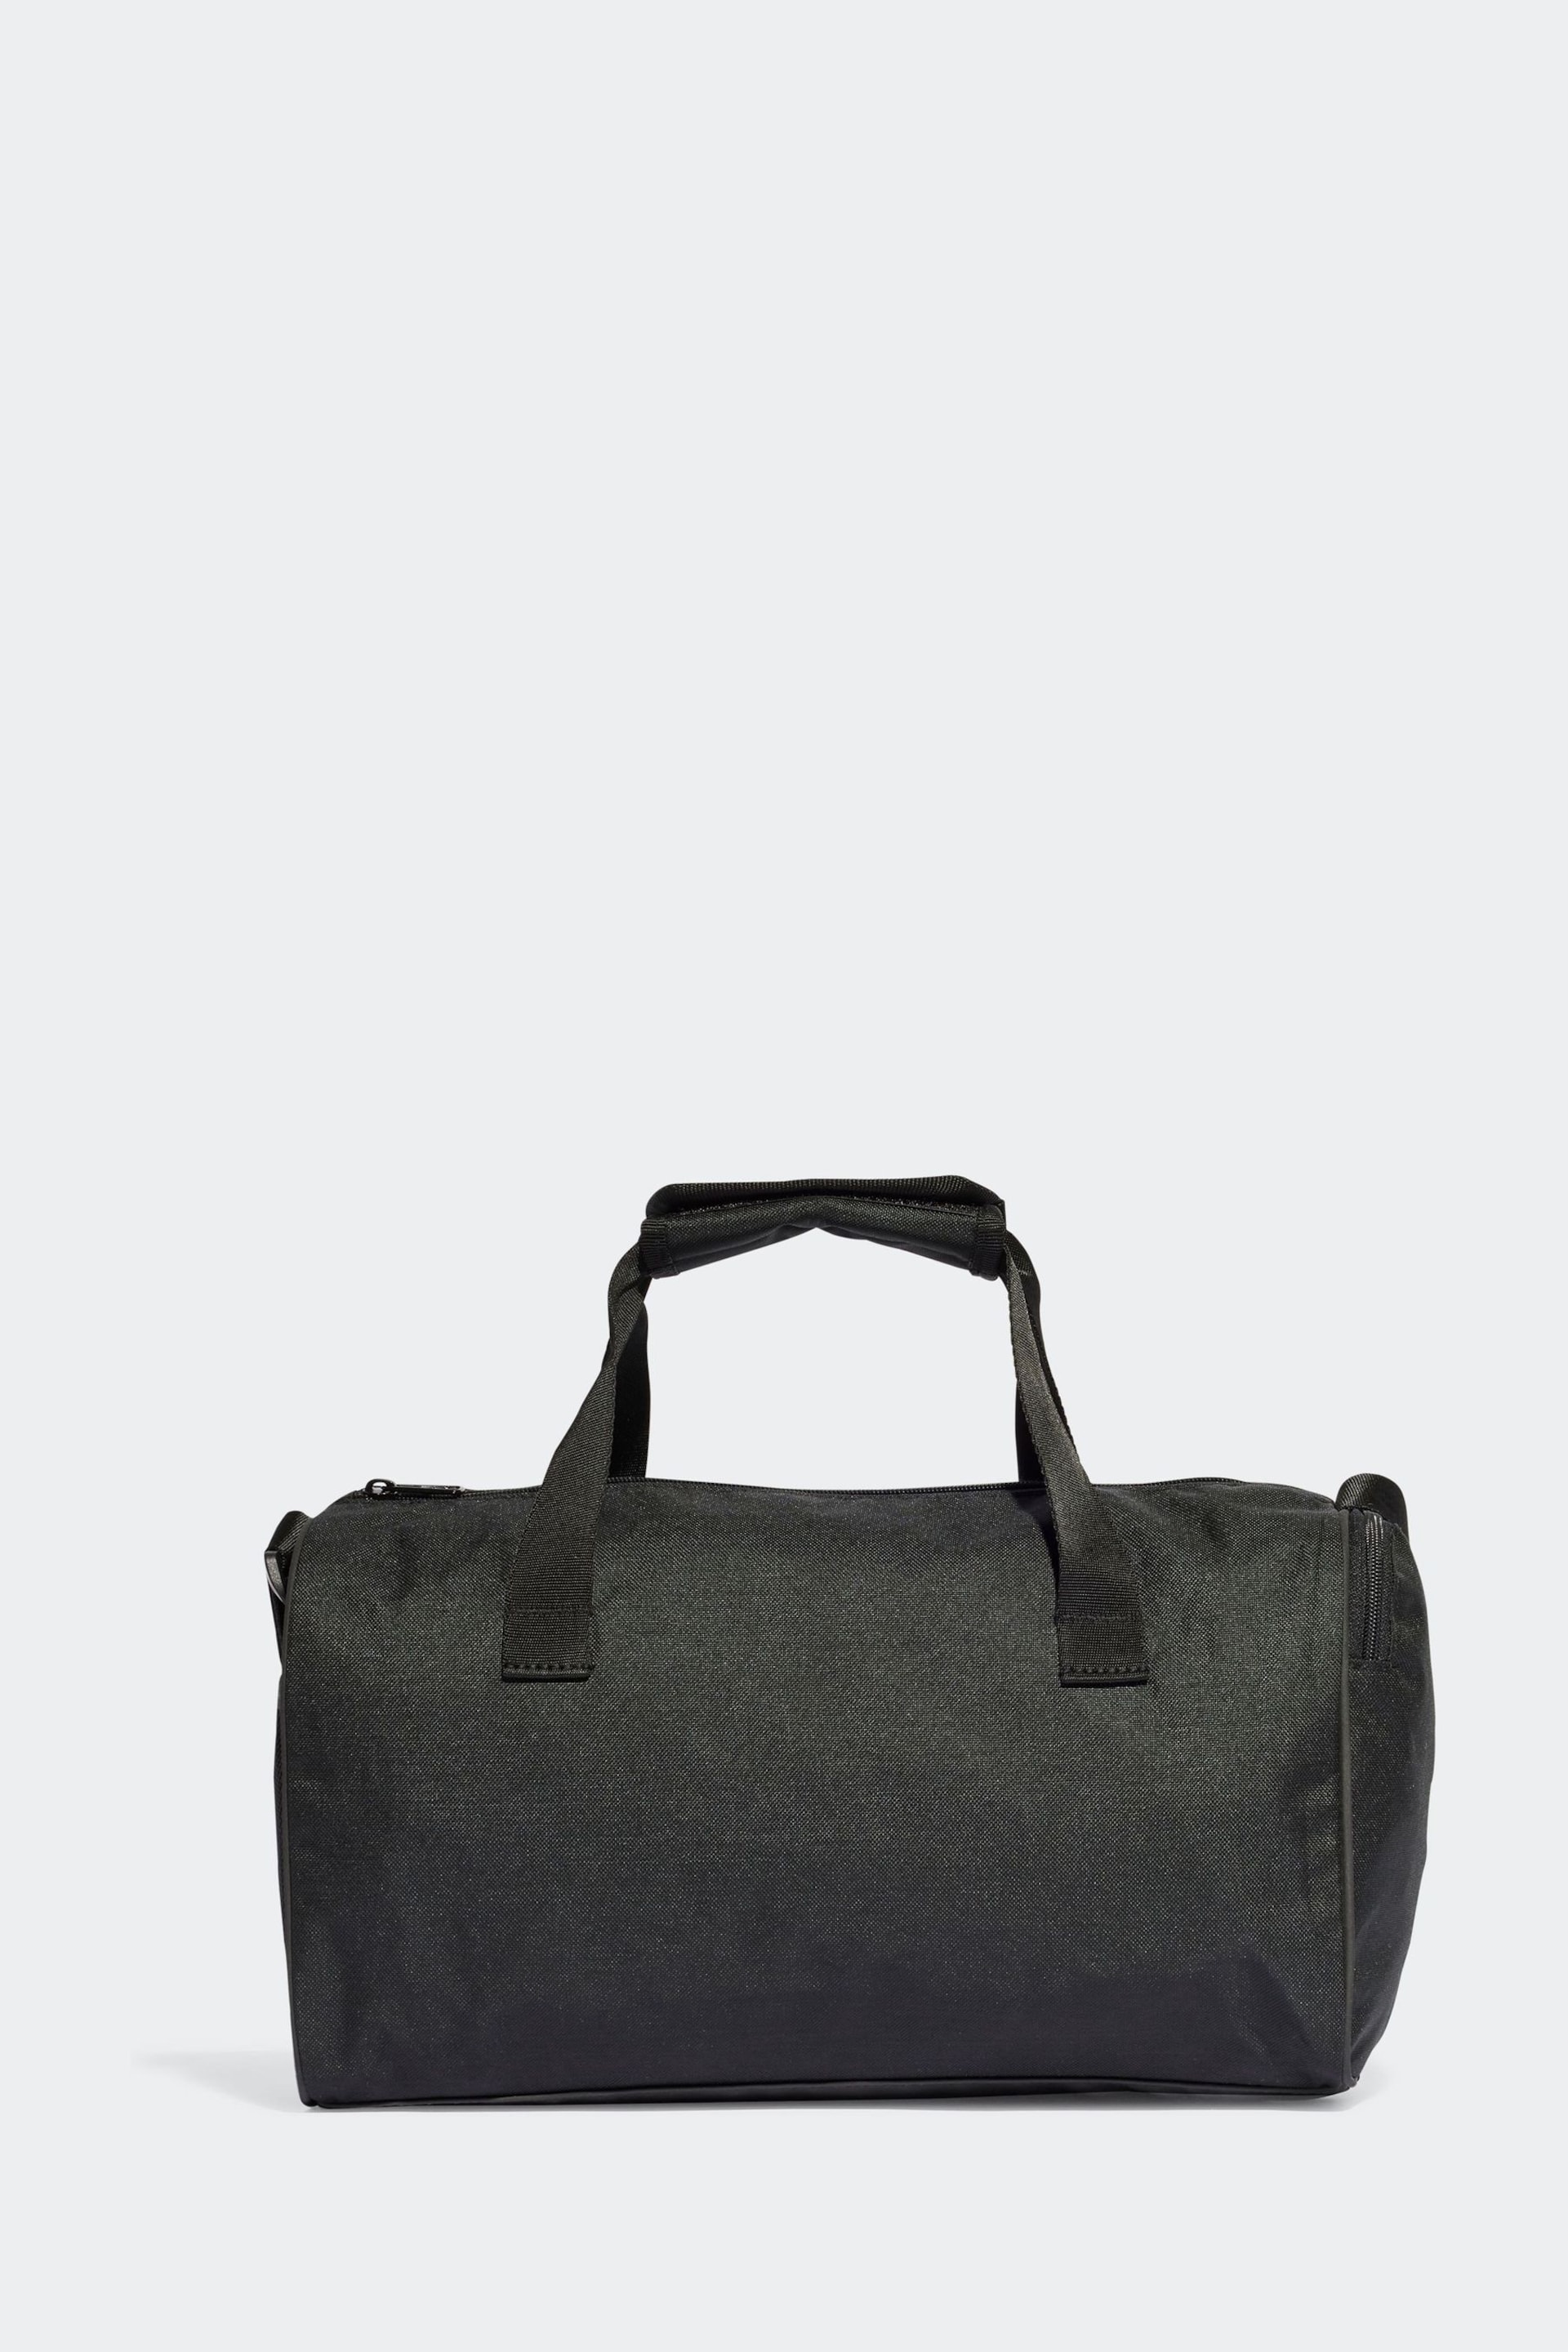 adidas Black Extra Small Essentials Linear Duffel Bag - Image 2 of 5